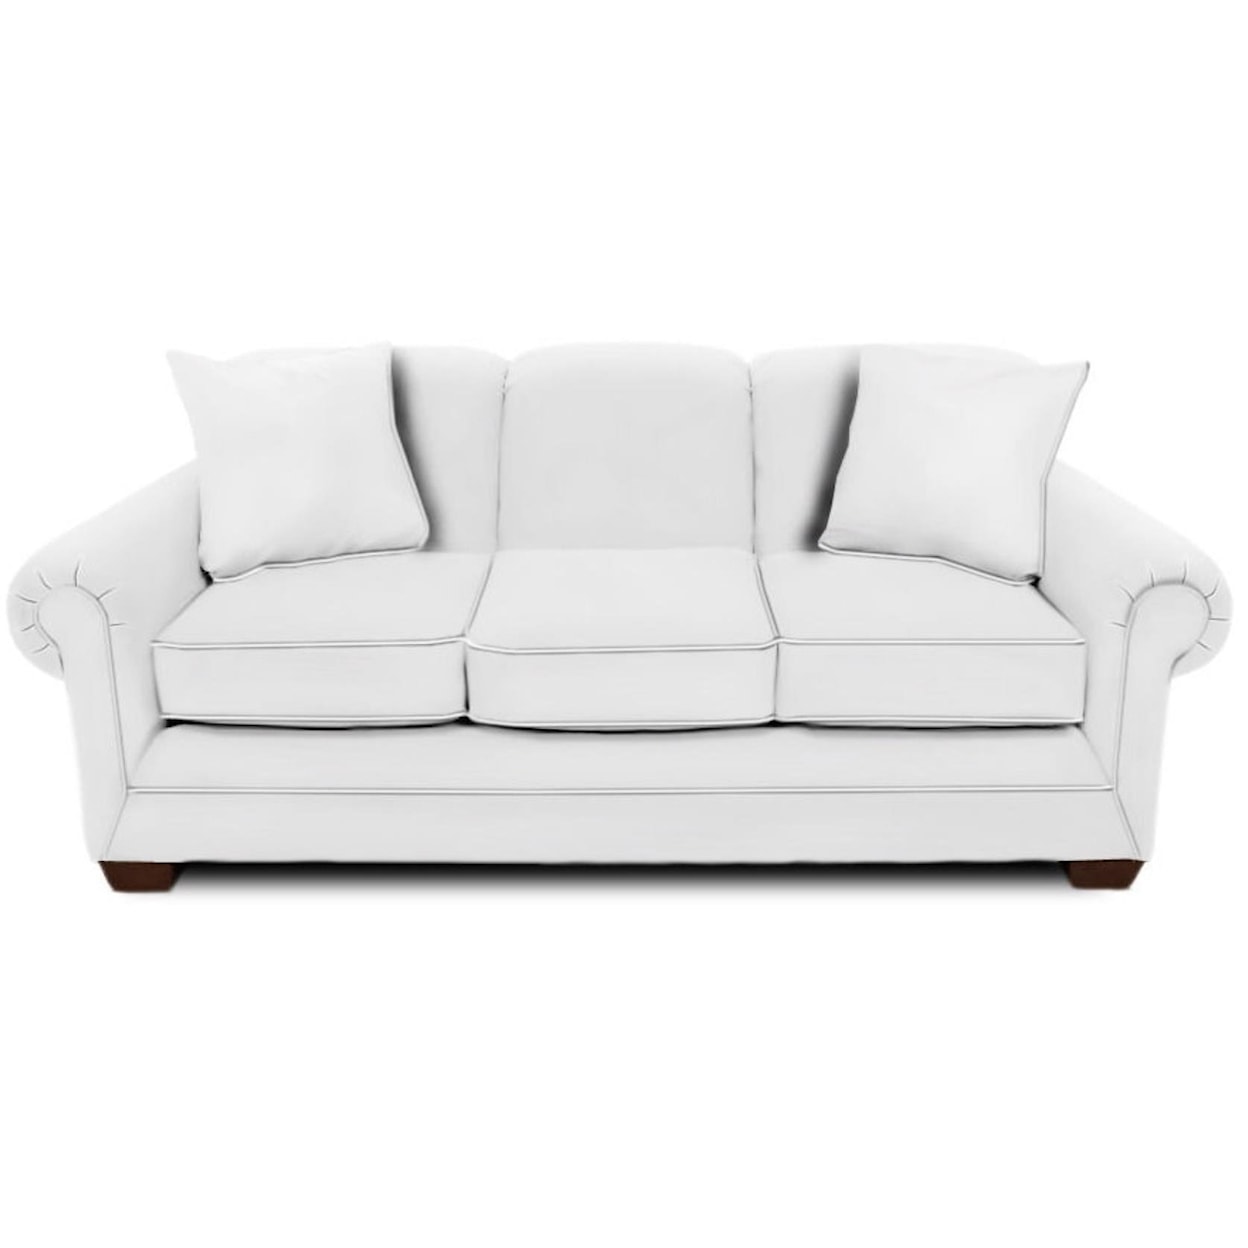 England Monroe Sleeper Sofa